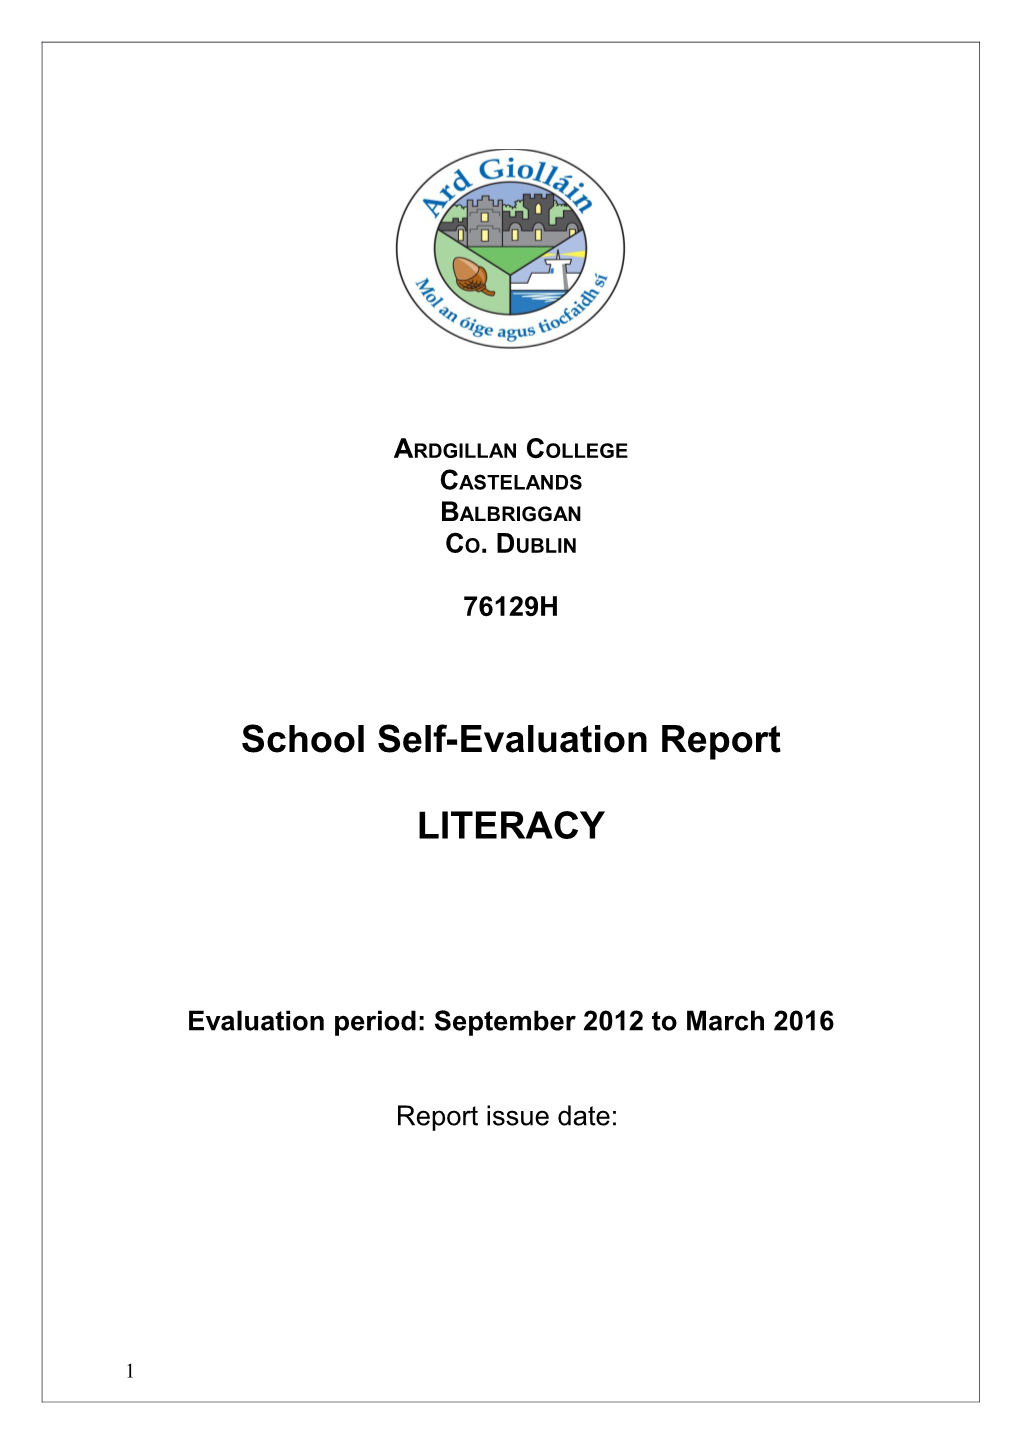 School Self-Evaluation Report